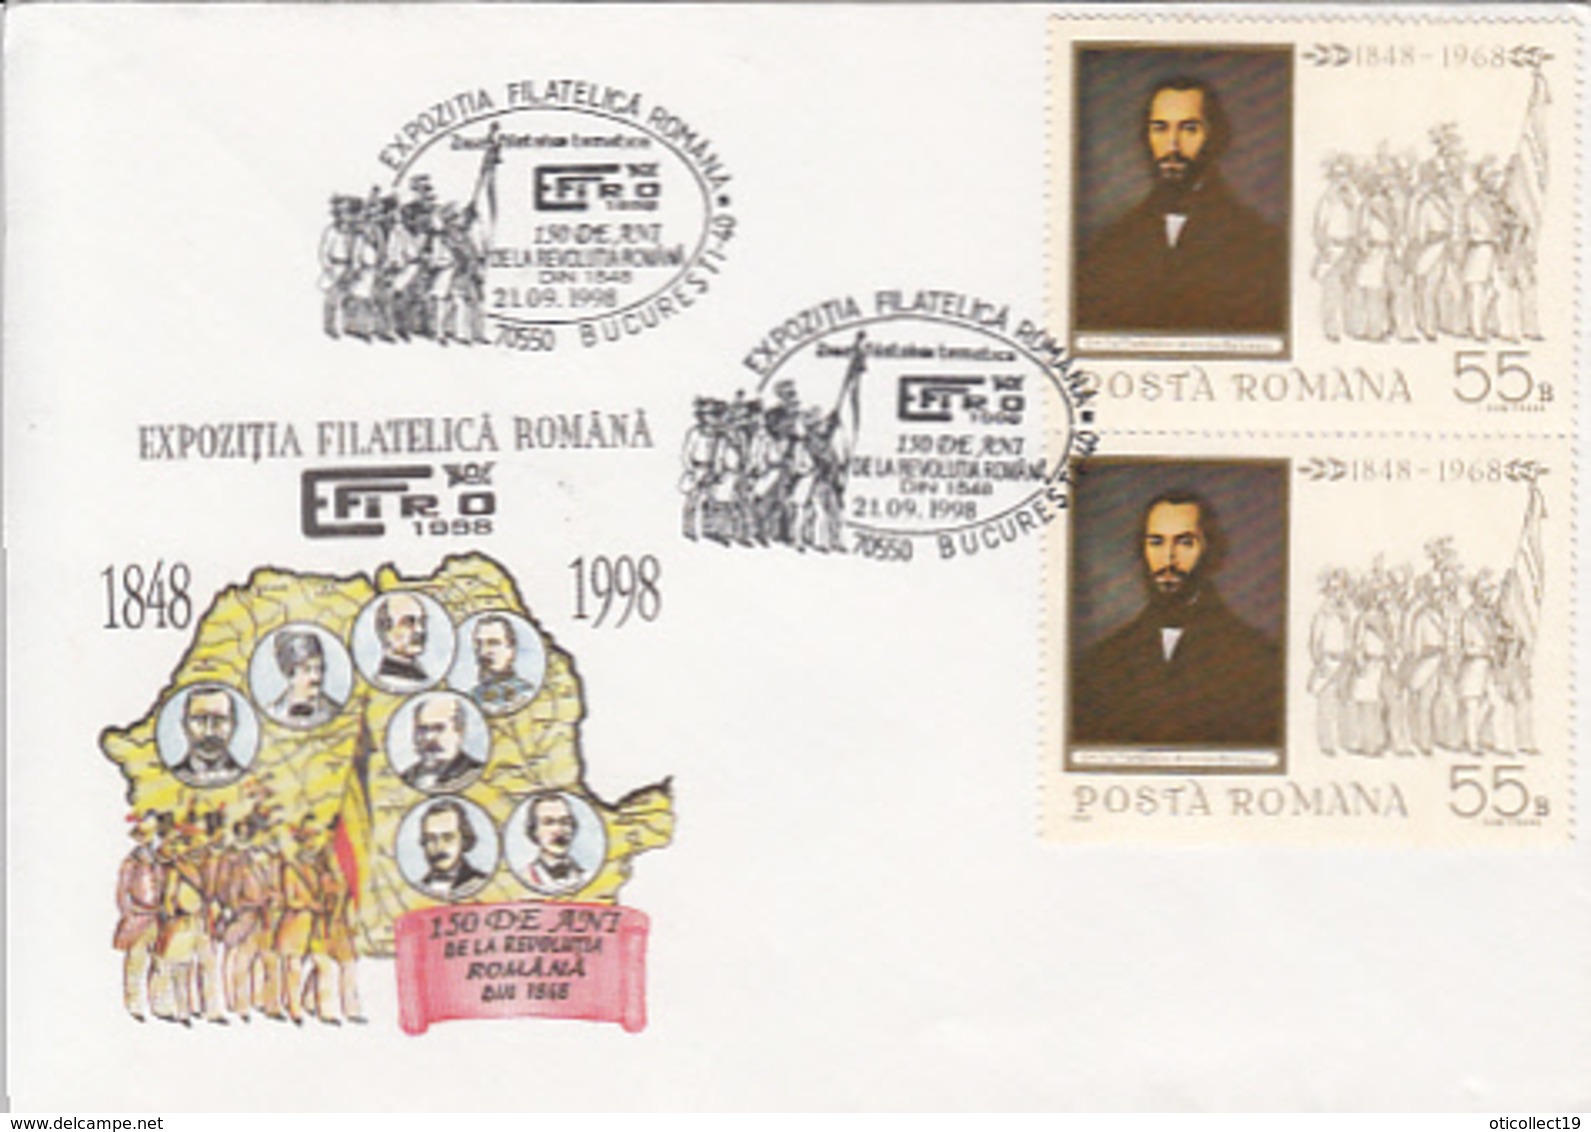 ROMANIAN 1848 REVOLUTION ANNIVERSARY, EFIRO PHILATELIC EXHIBITION, SPECIAL COVER, OVERPRINT STAMP, 1998, ROMANIA - Lettres & Documents